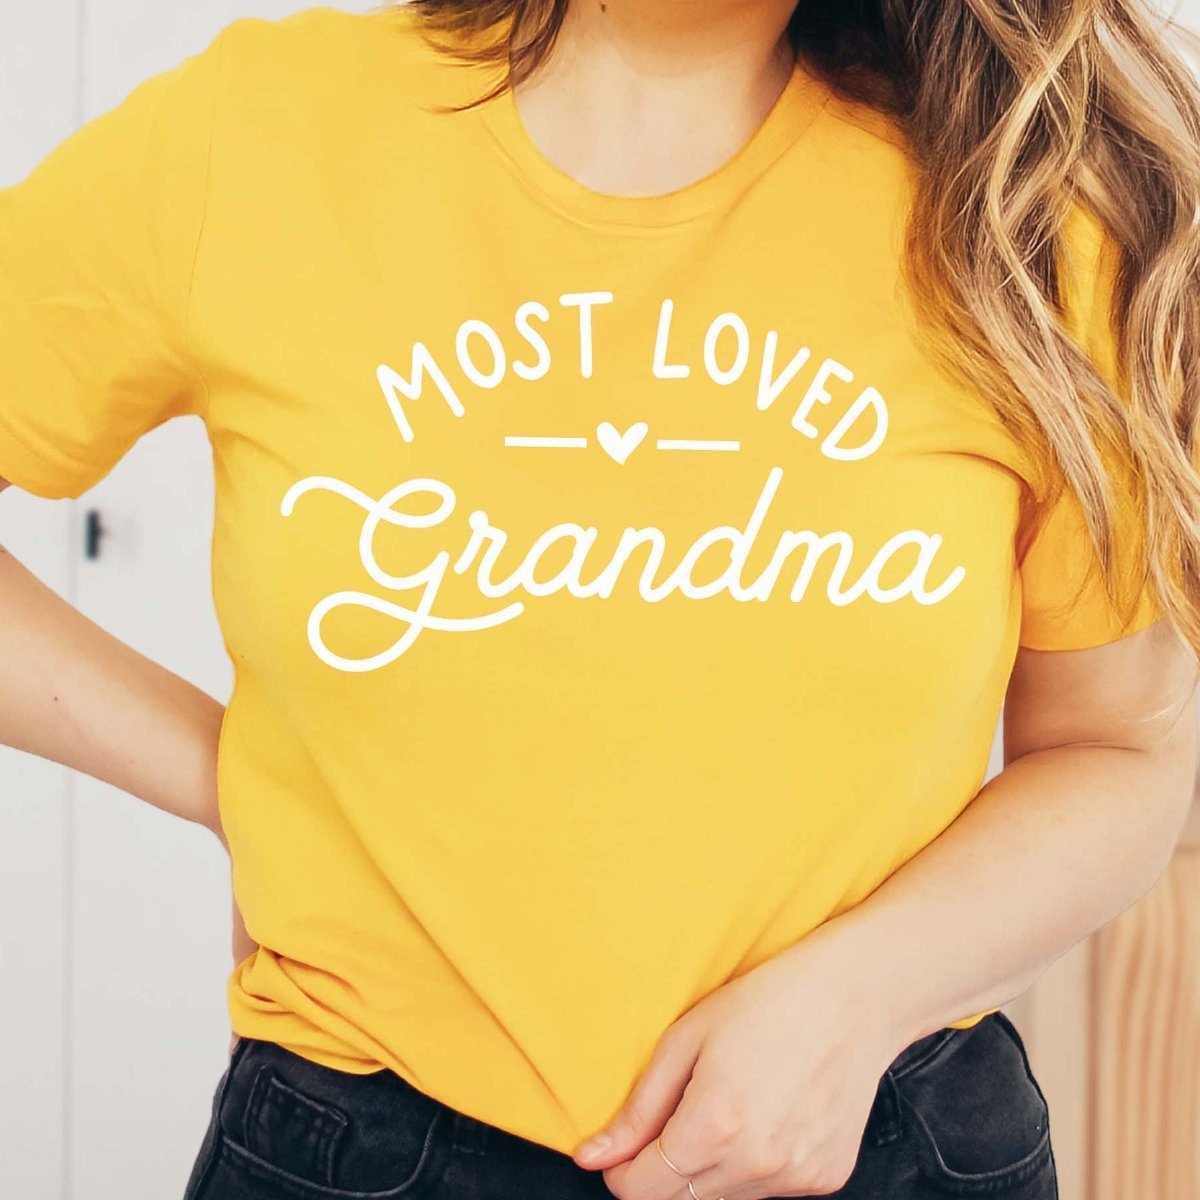 Most Loves Grandma Wholesale Tee - Limeberry Designs